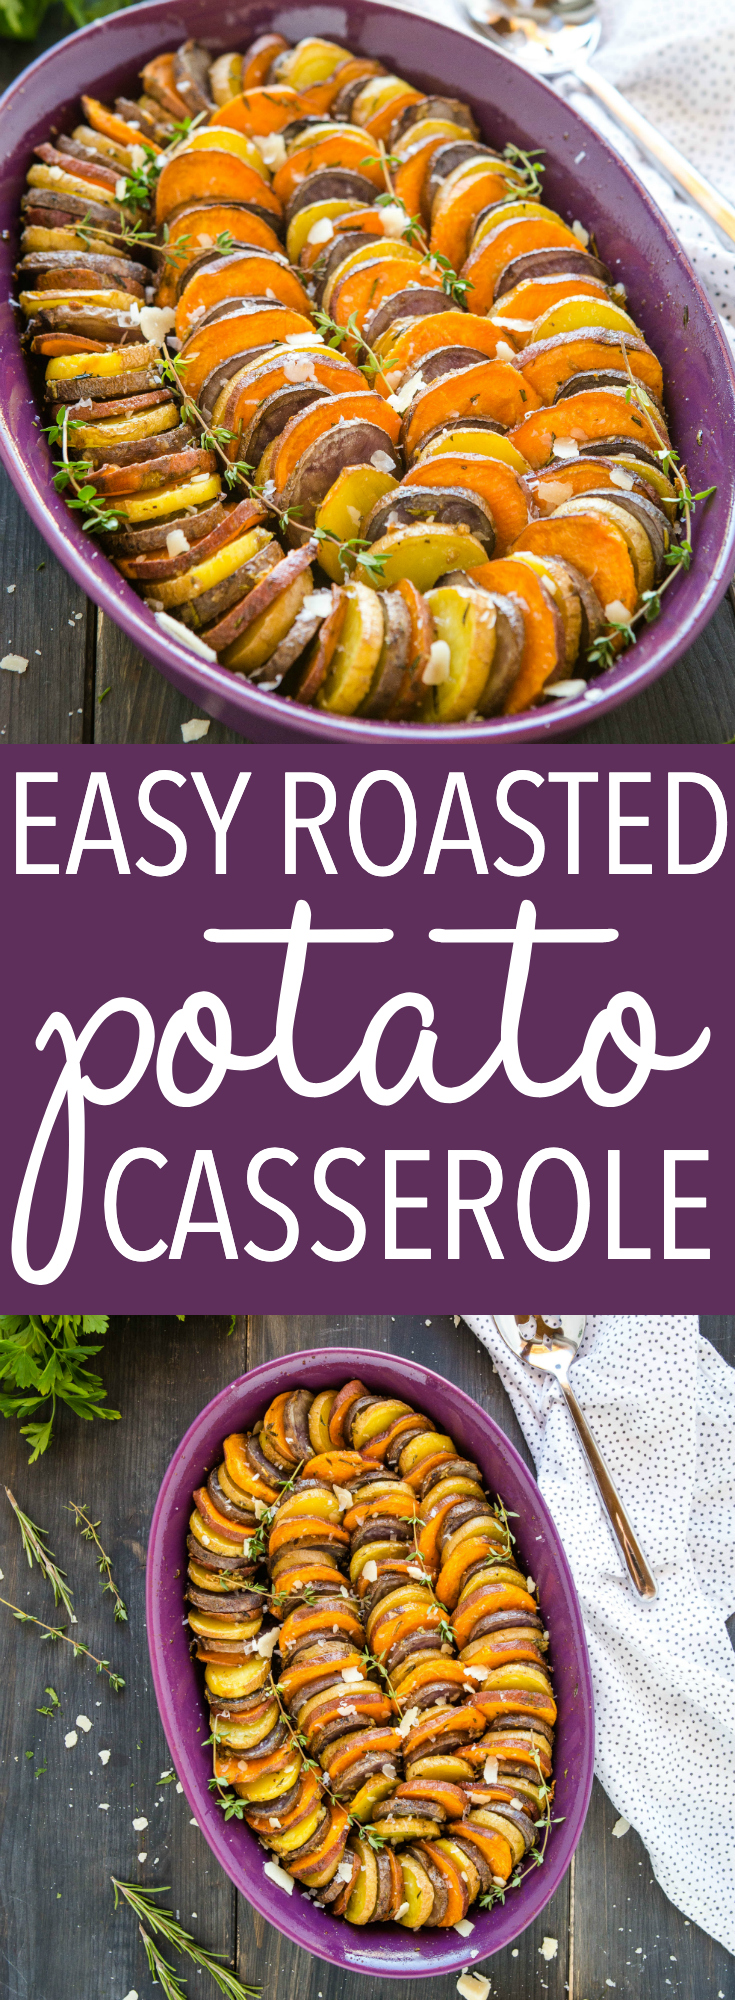 easy roasted potato casserole pinterest